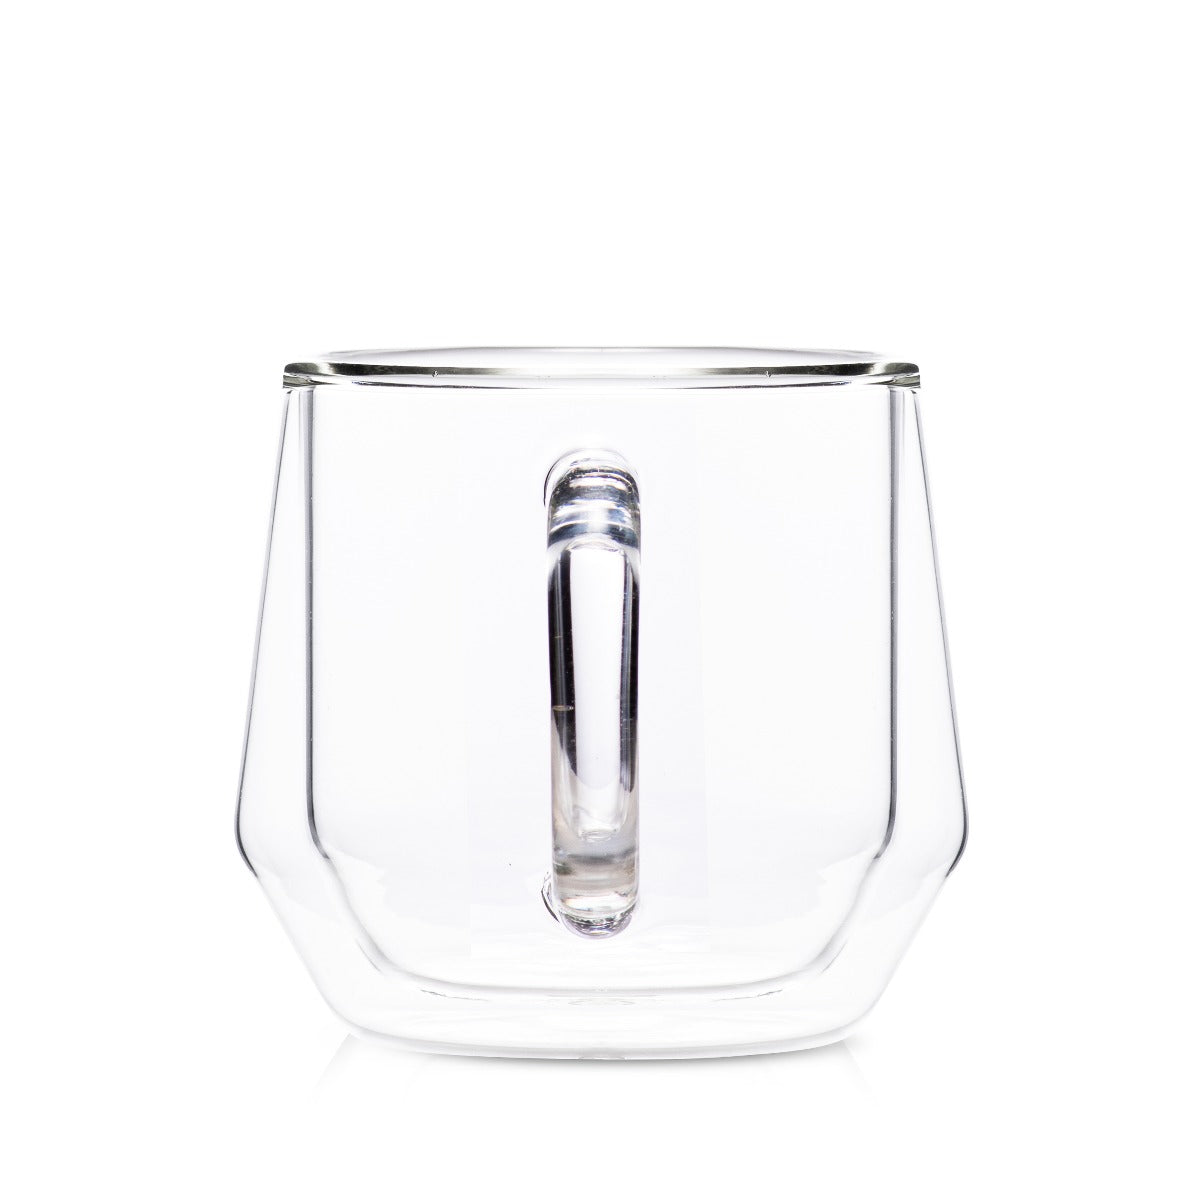 Hearth Double Wall Glass Mug, 240ml (8 oz) - Set of 2